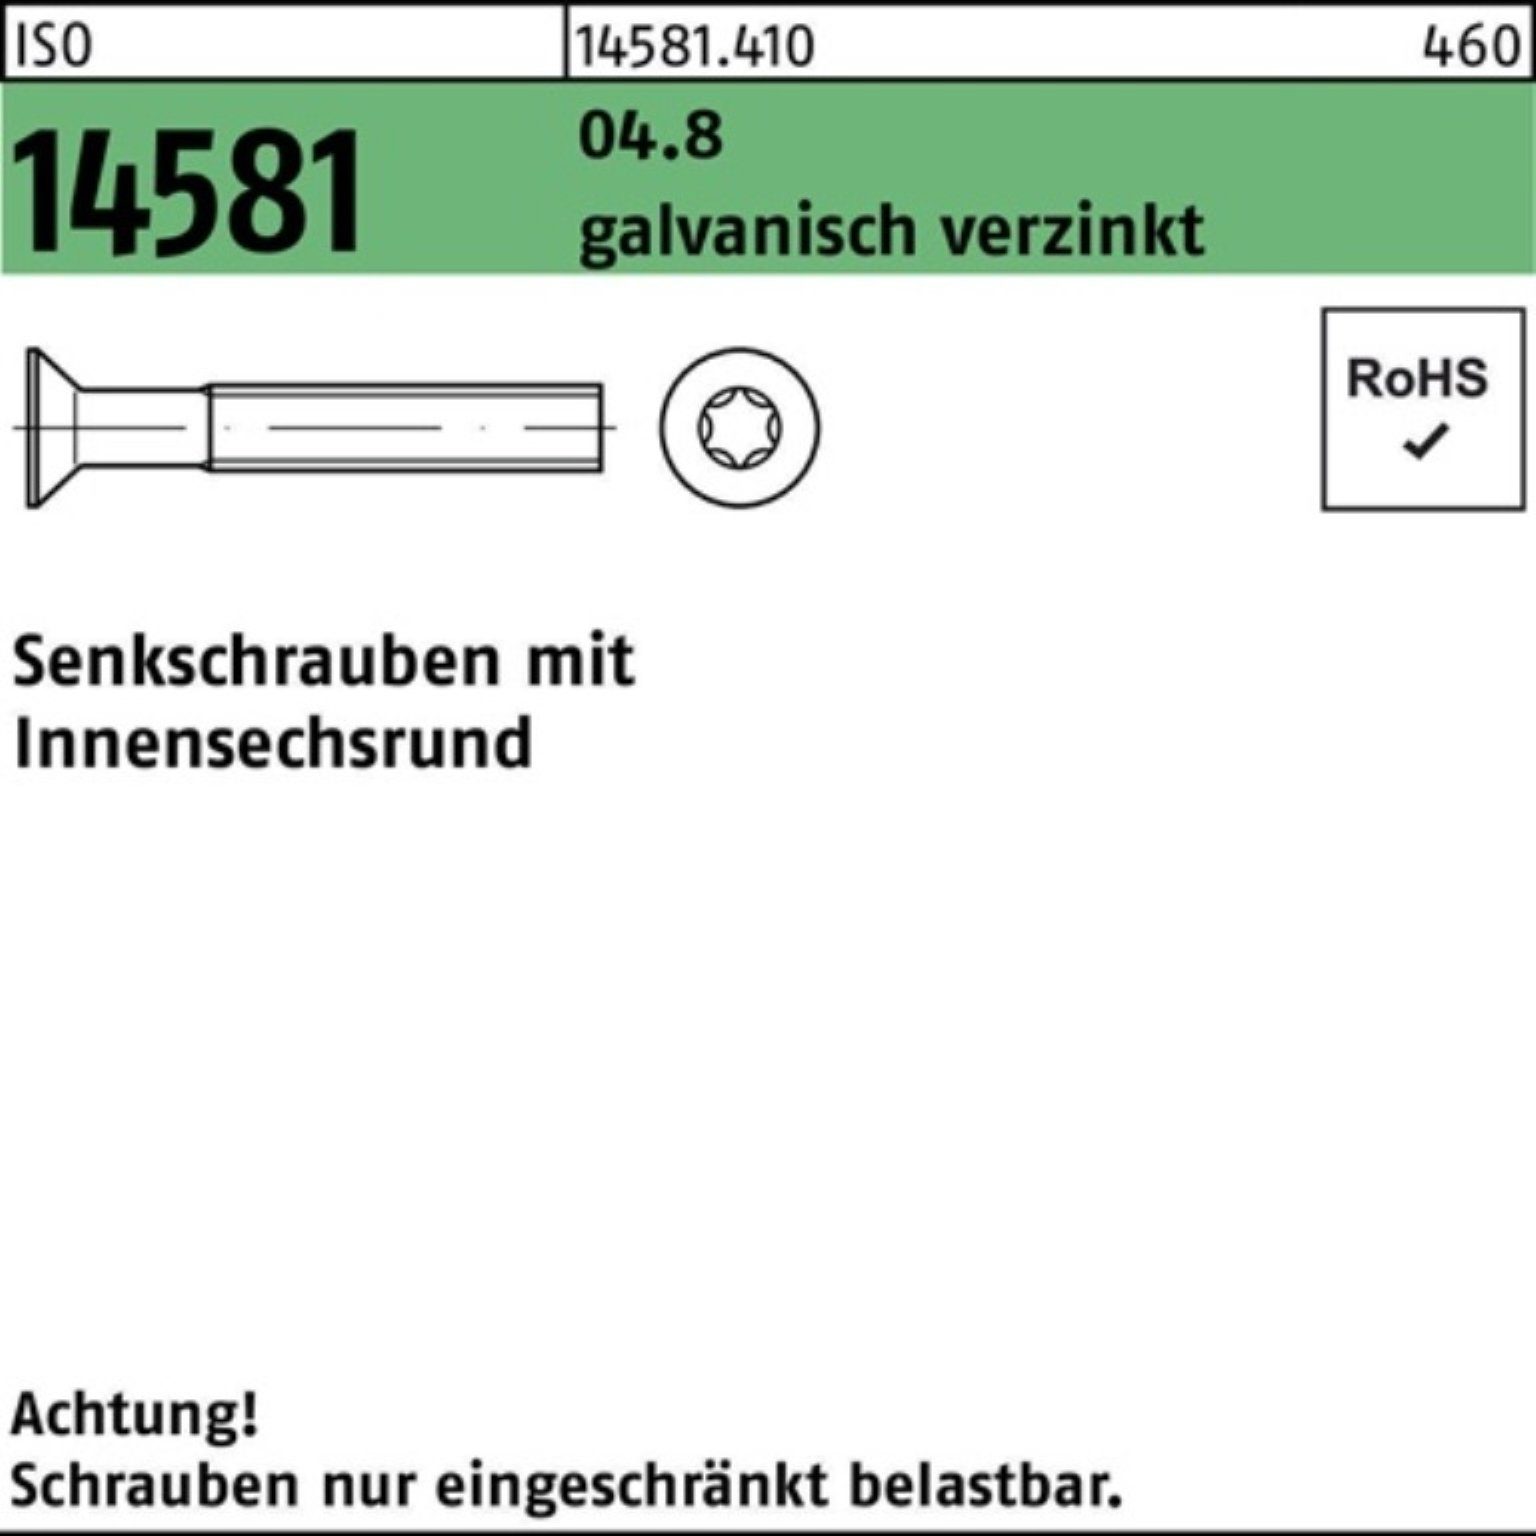 Reyher Senkschraube 1000er Pack Senkschraube ISO 14581 ISR M5x30 T25 04.8 galv.verz. 1000S